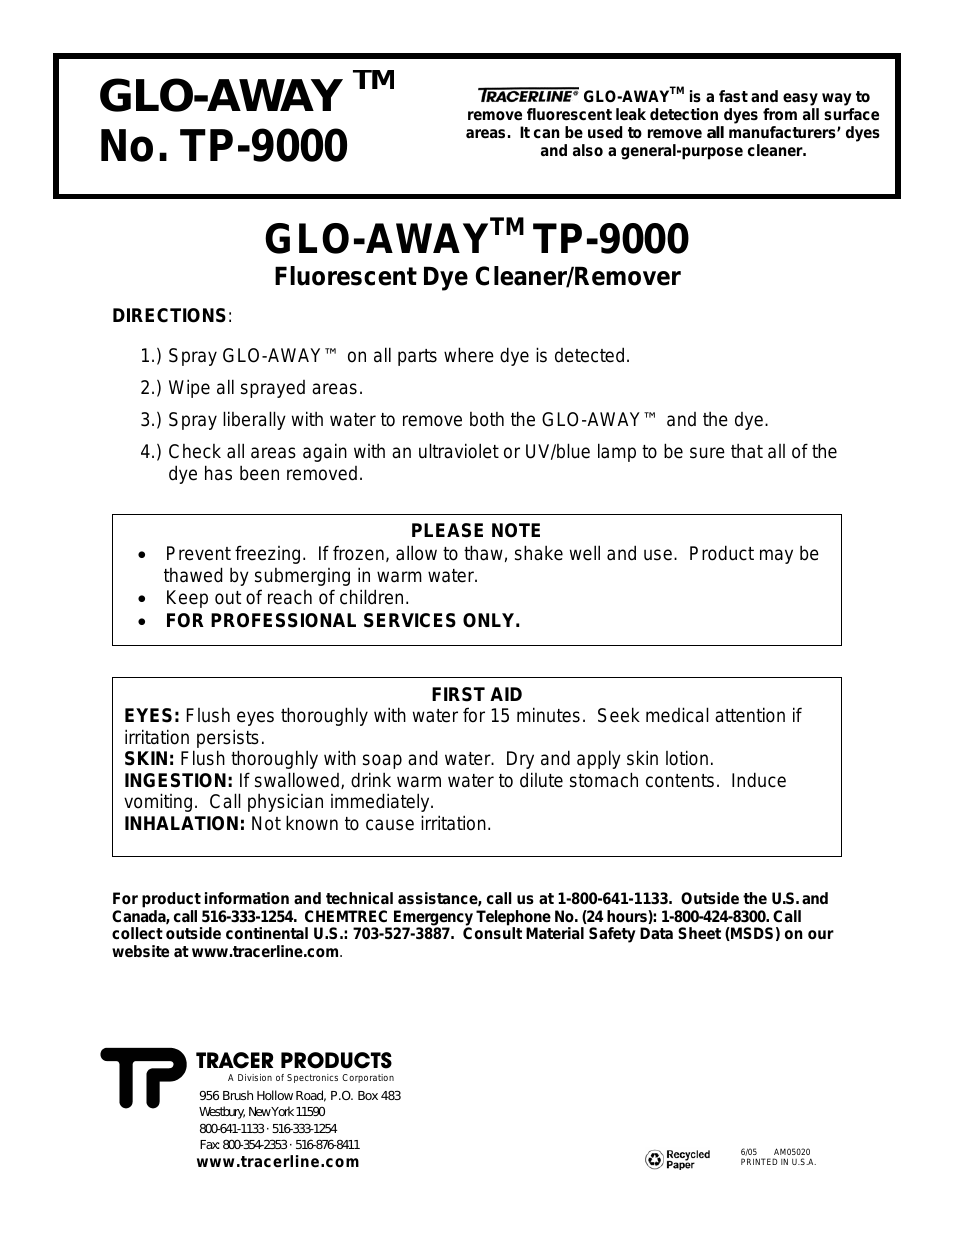 Glo-Away TP-9000 AM05020